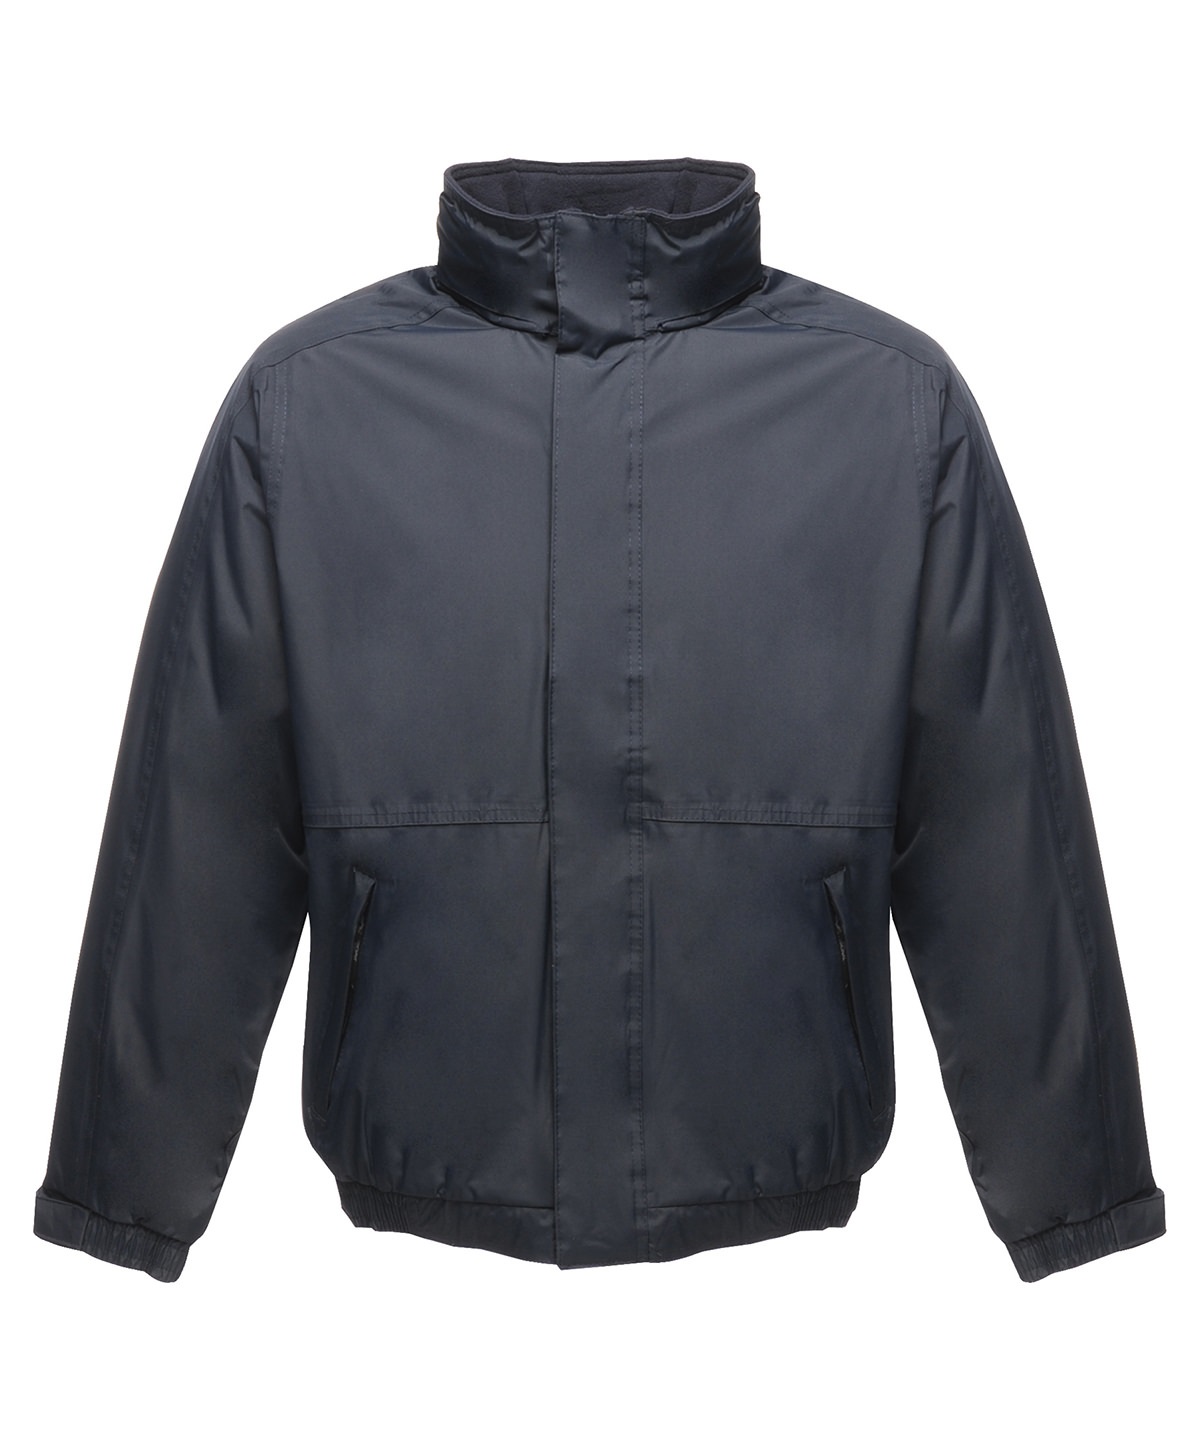 RG045 Dover jacket - Academy Crests